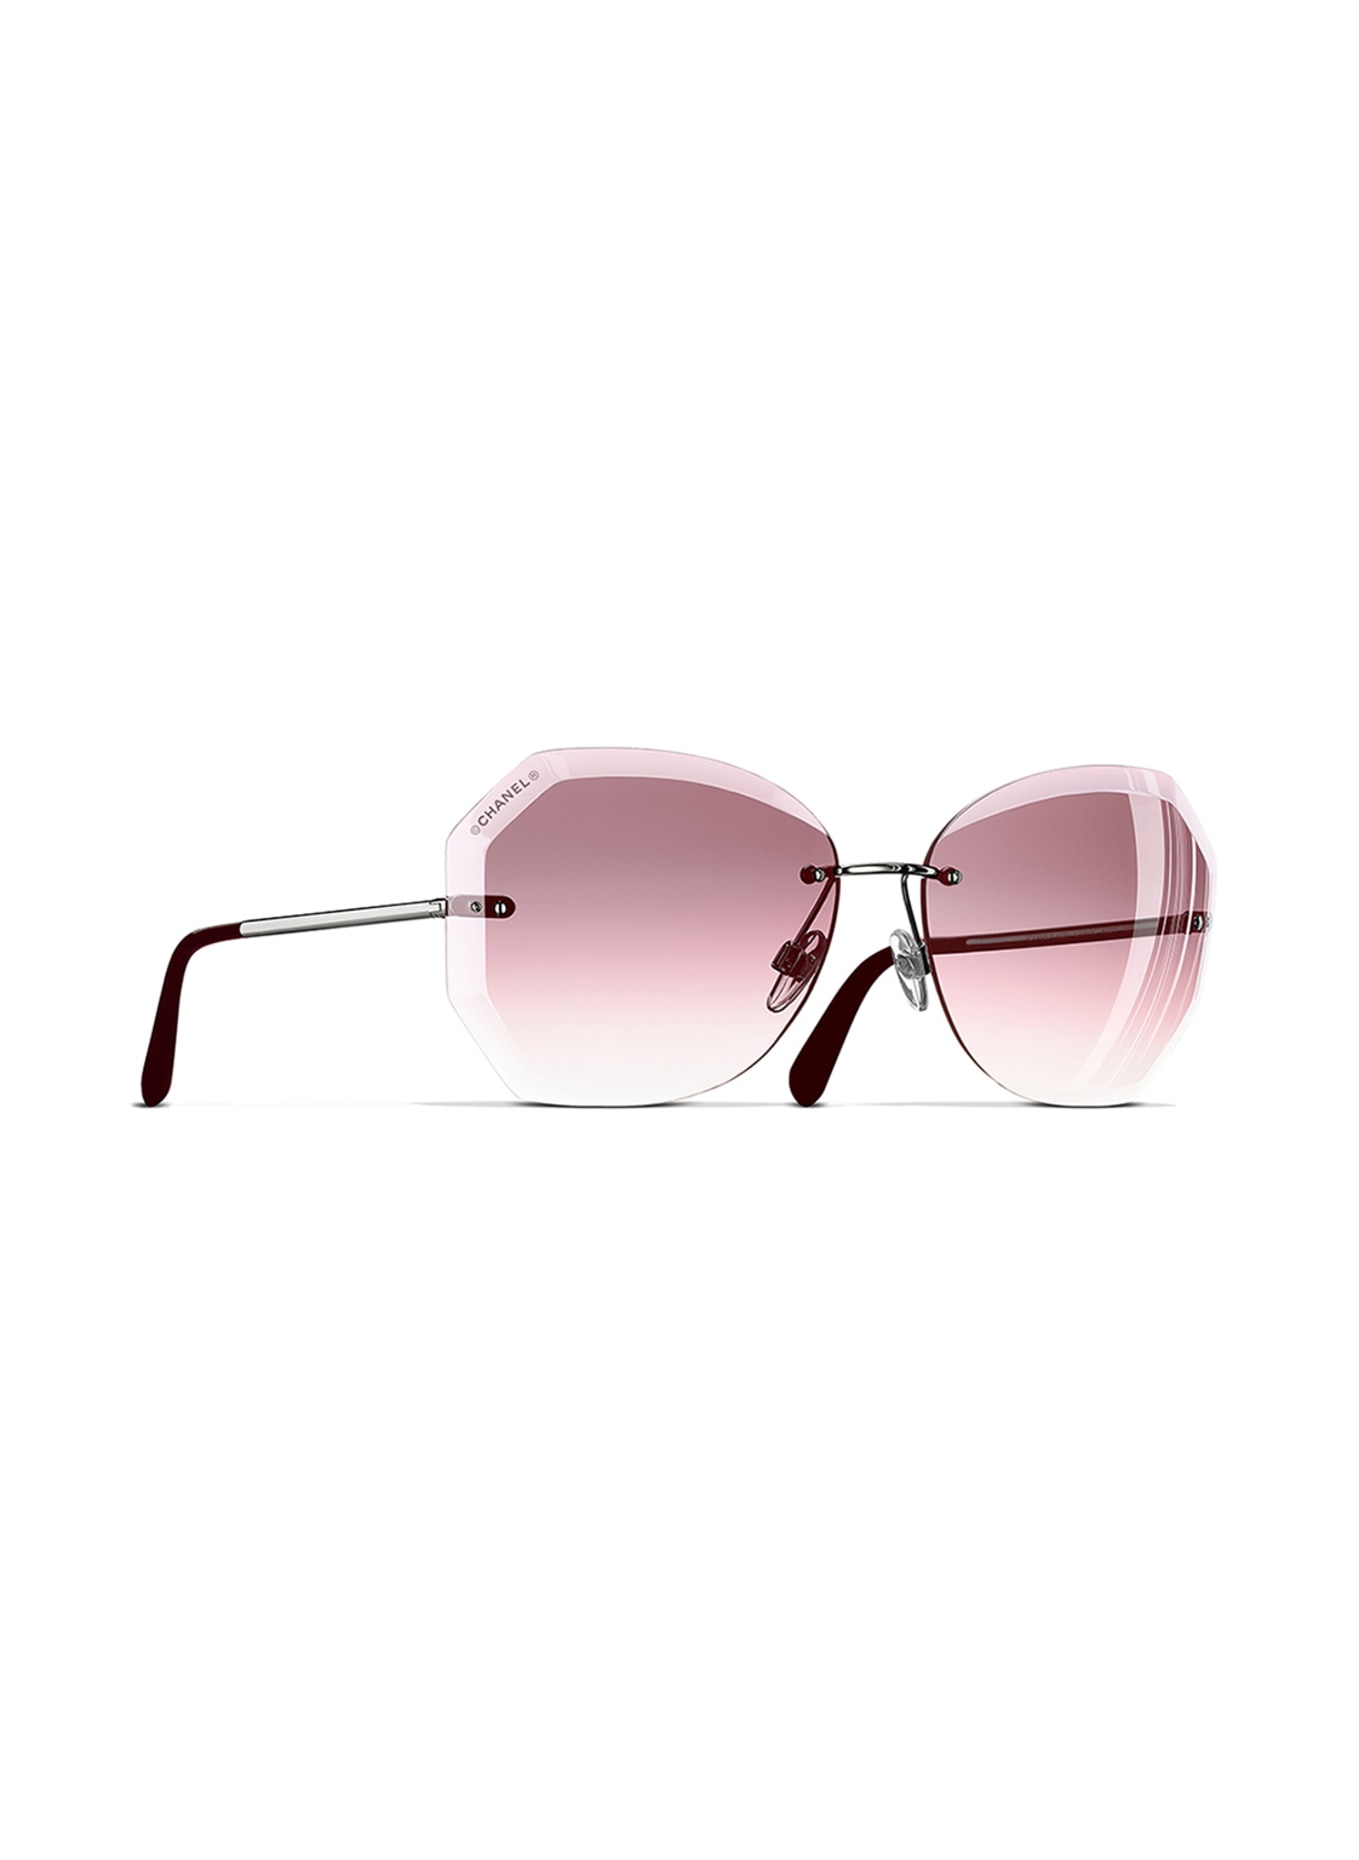 CHANEL Round sunglasses in c1083p - pink/ rosé gradient